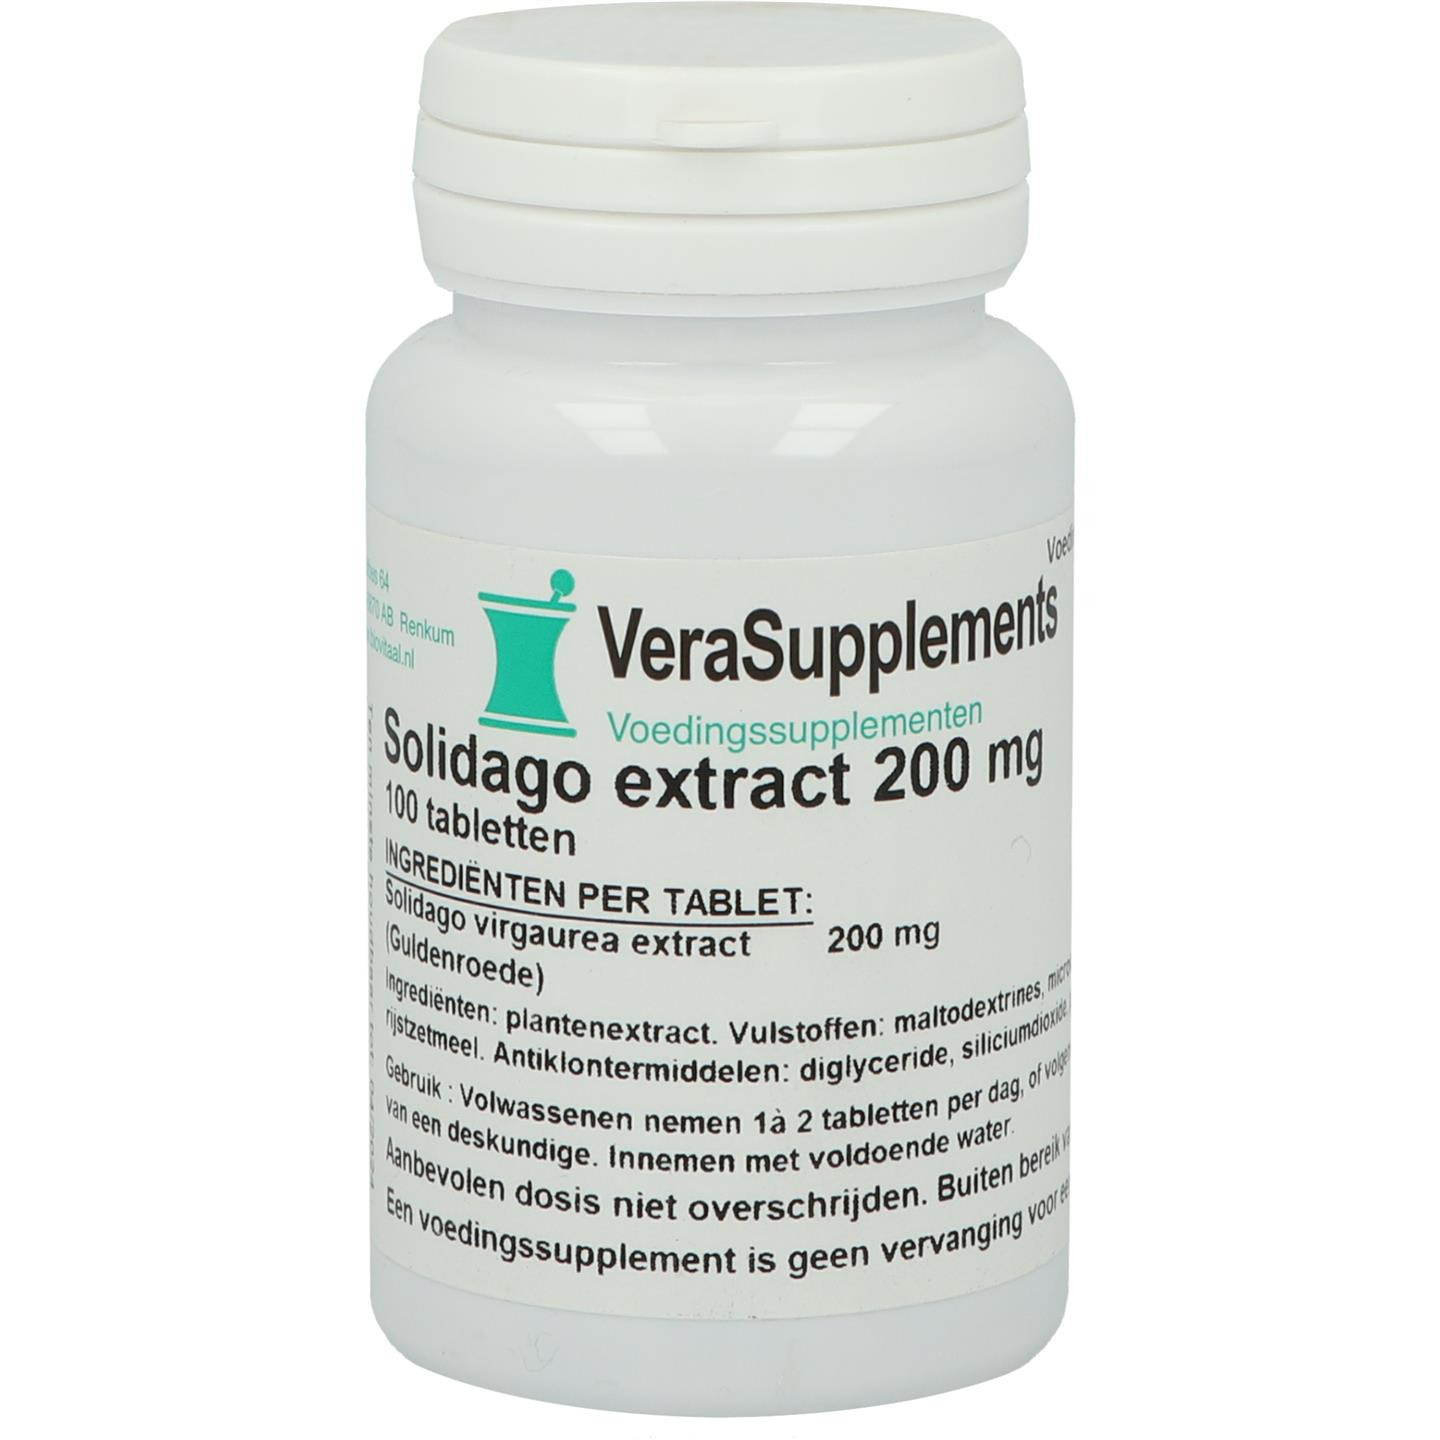 Solidago extract 200 mg